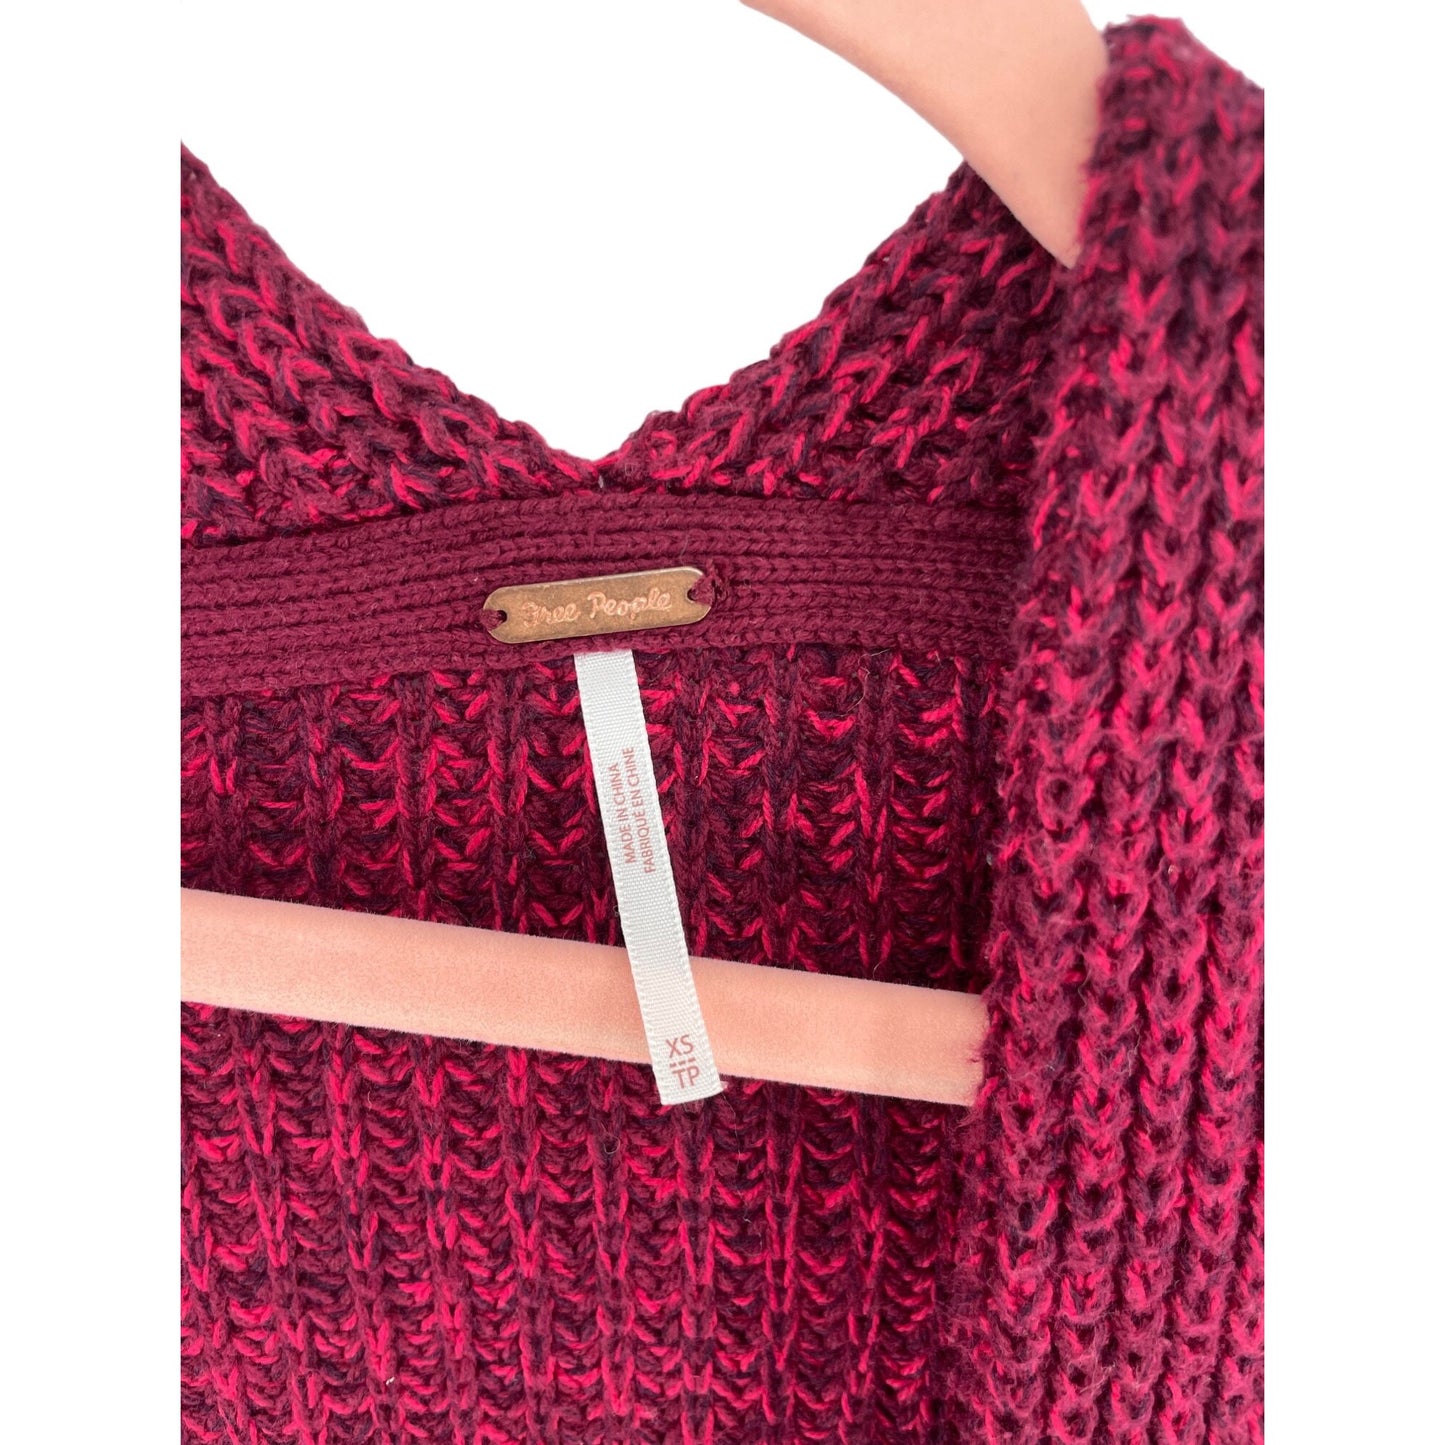 Free People Women's XS Oversized Maroon/Burgundy/Wine Cardigan Sweater